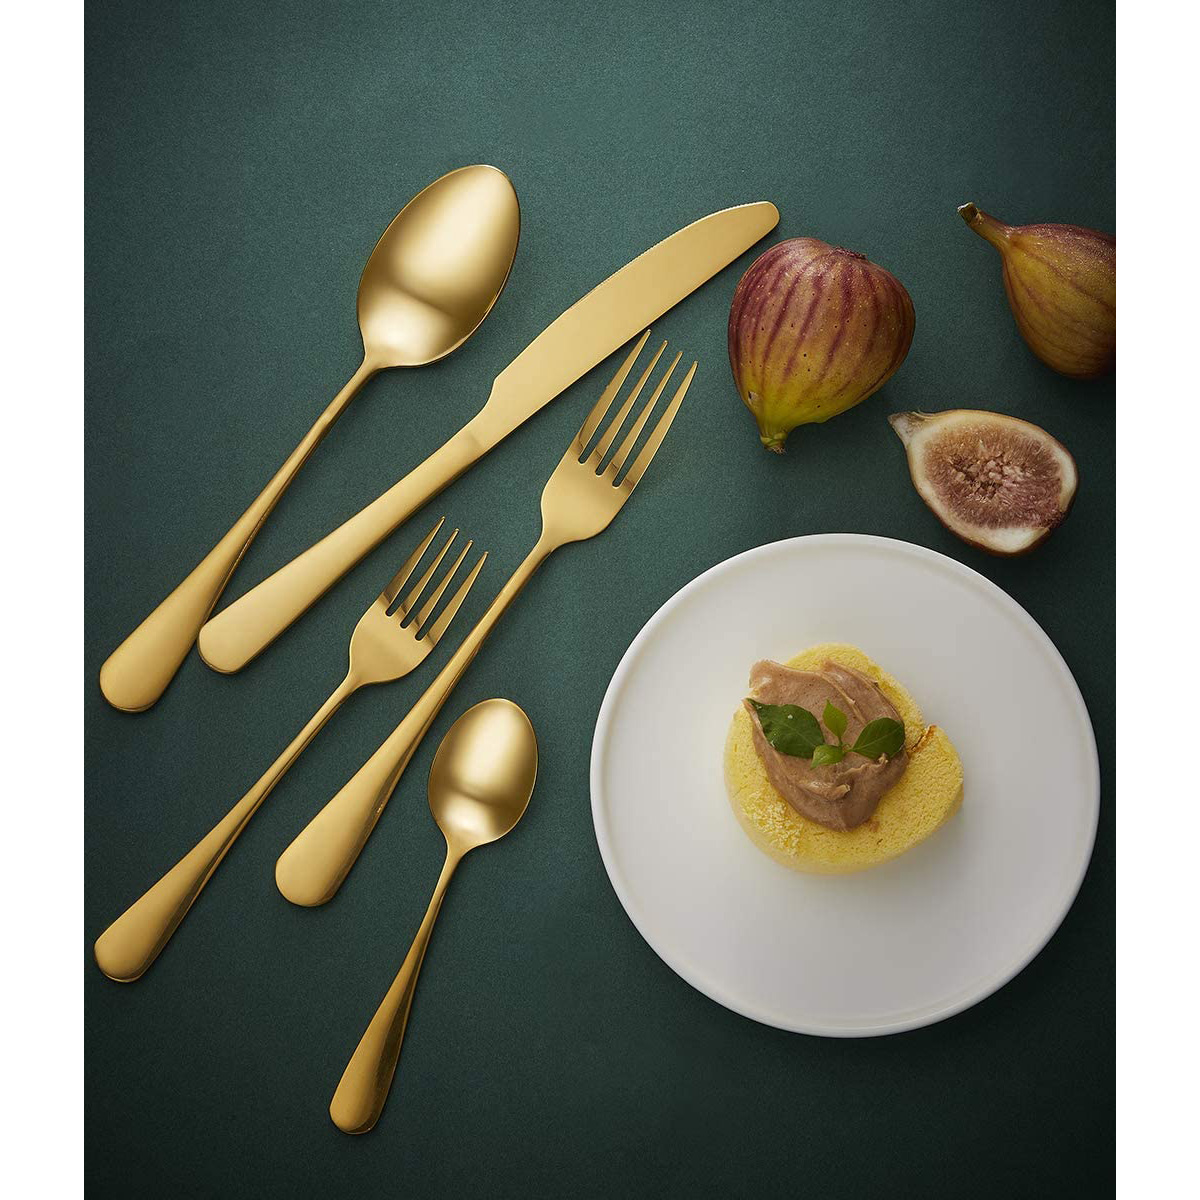 Wholesale Amazon Hot Gold Flatware Restaurant Shiny Stainless Steel Cutlery Set